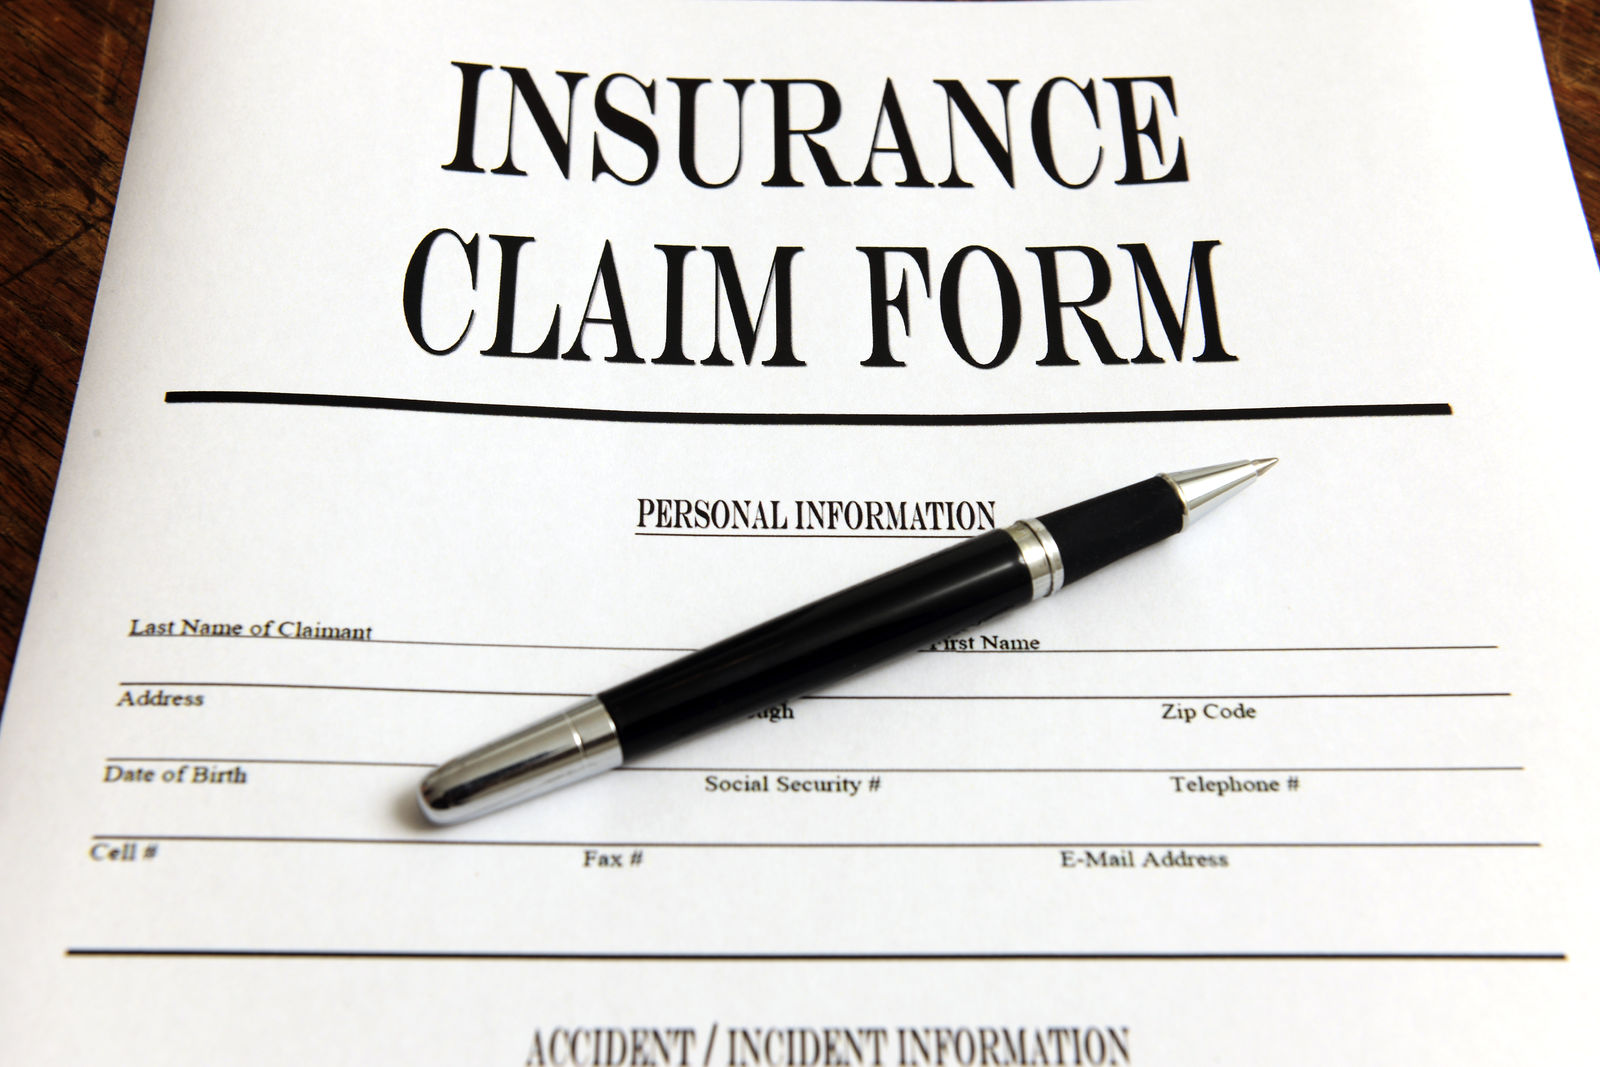 How long do car insurance companies keep claims records?